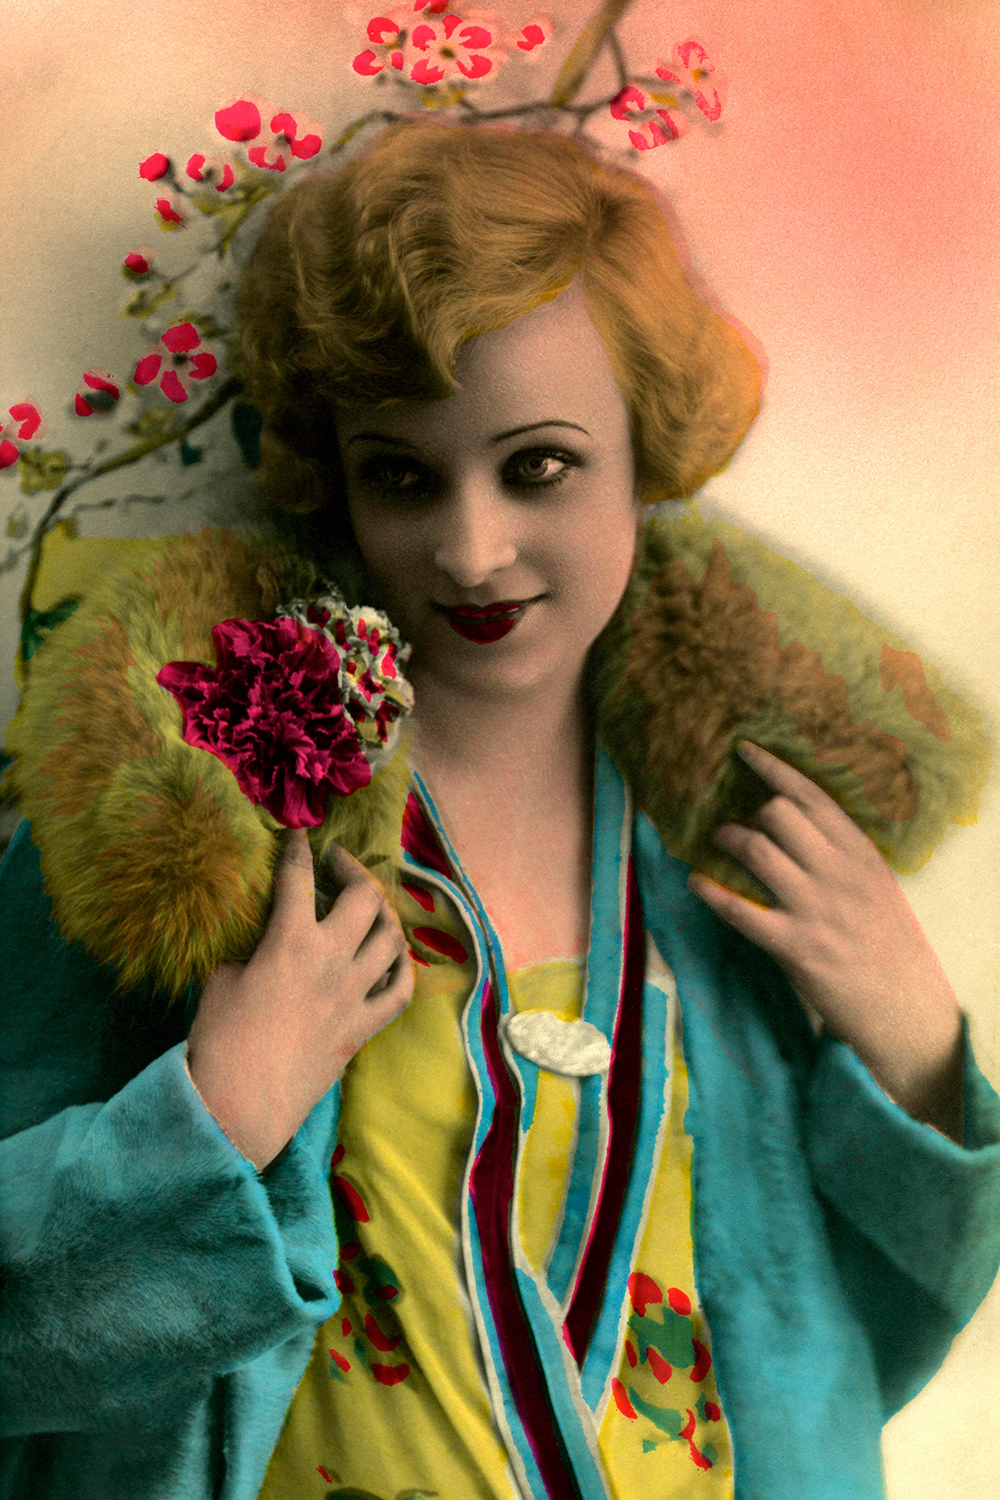 1920s fashion: Duitse vrouw